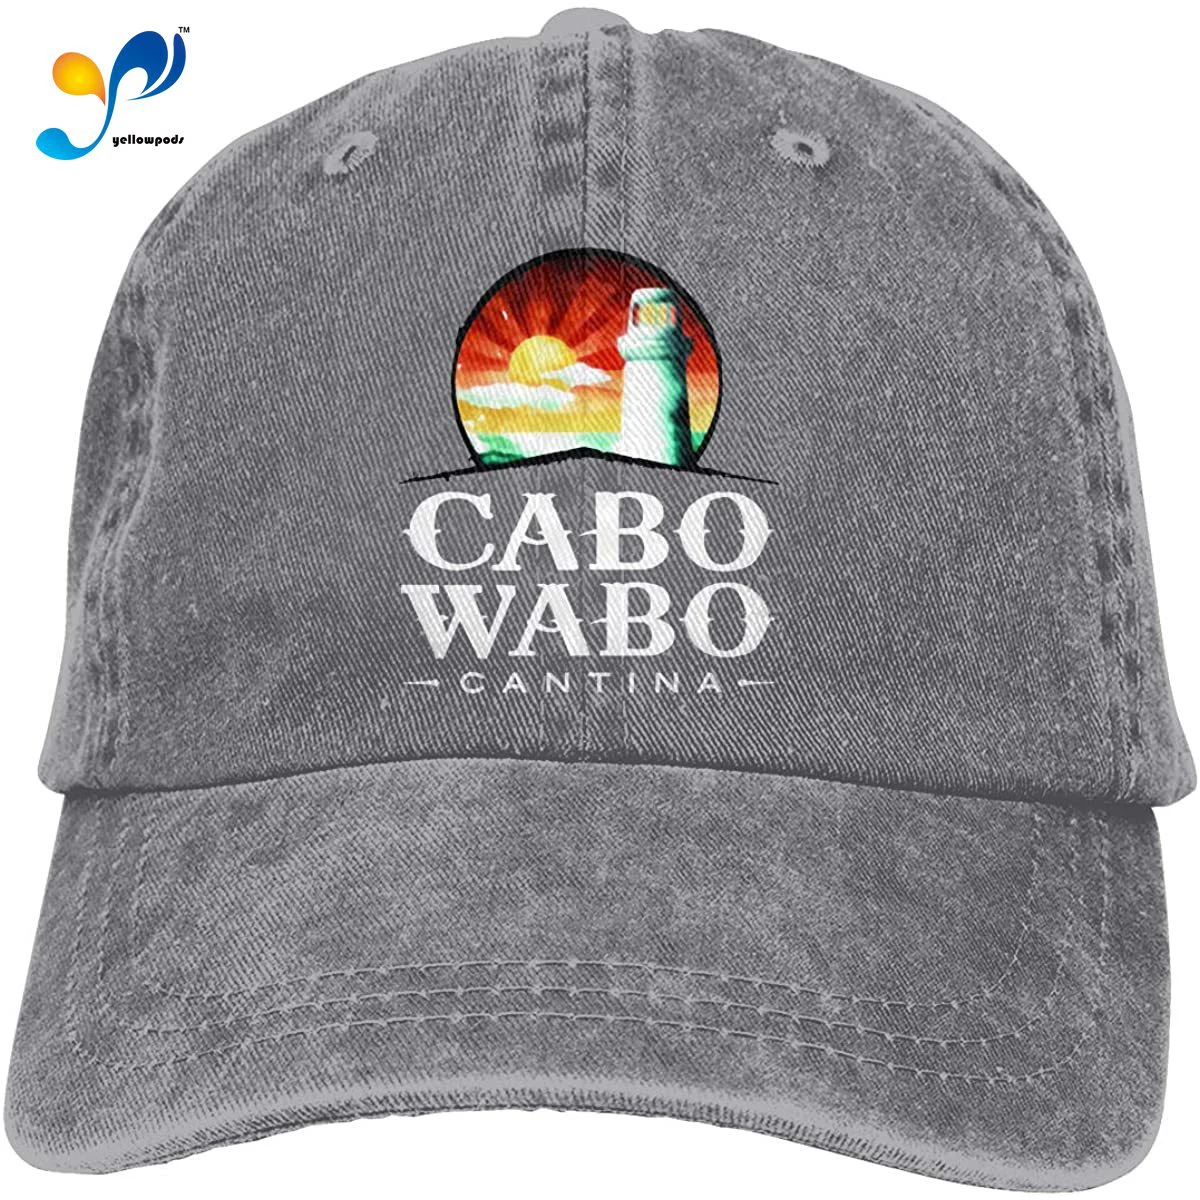 

Cabo Wabo Adult Cool Cowboy Hat Adjustable Casquette Baseball Cap Black Gorras Hombre Snapback